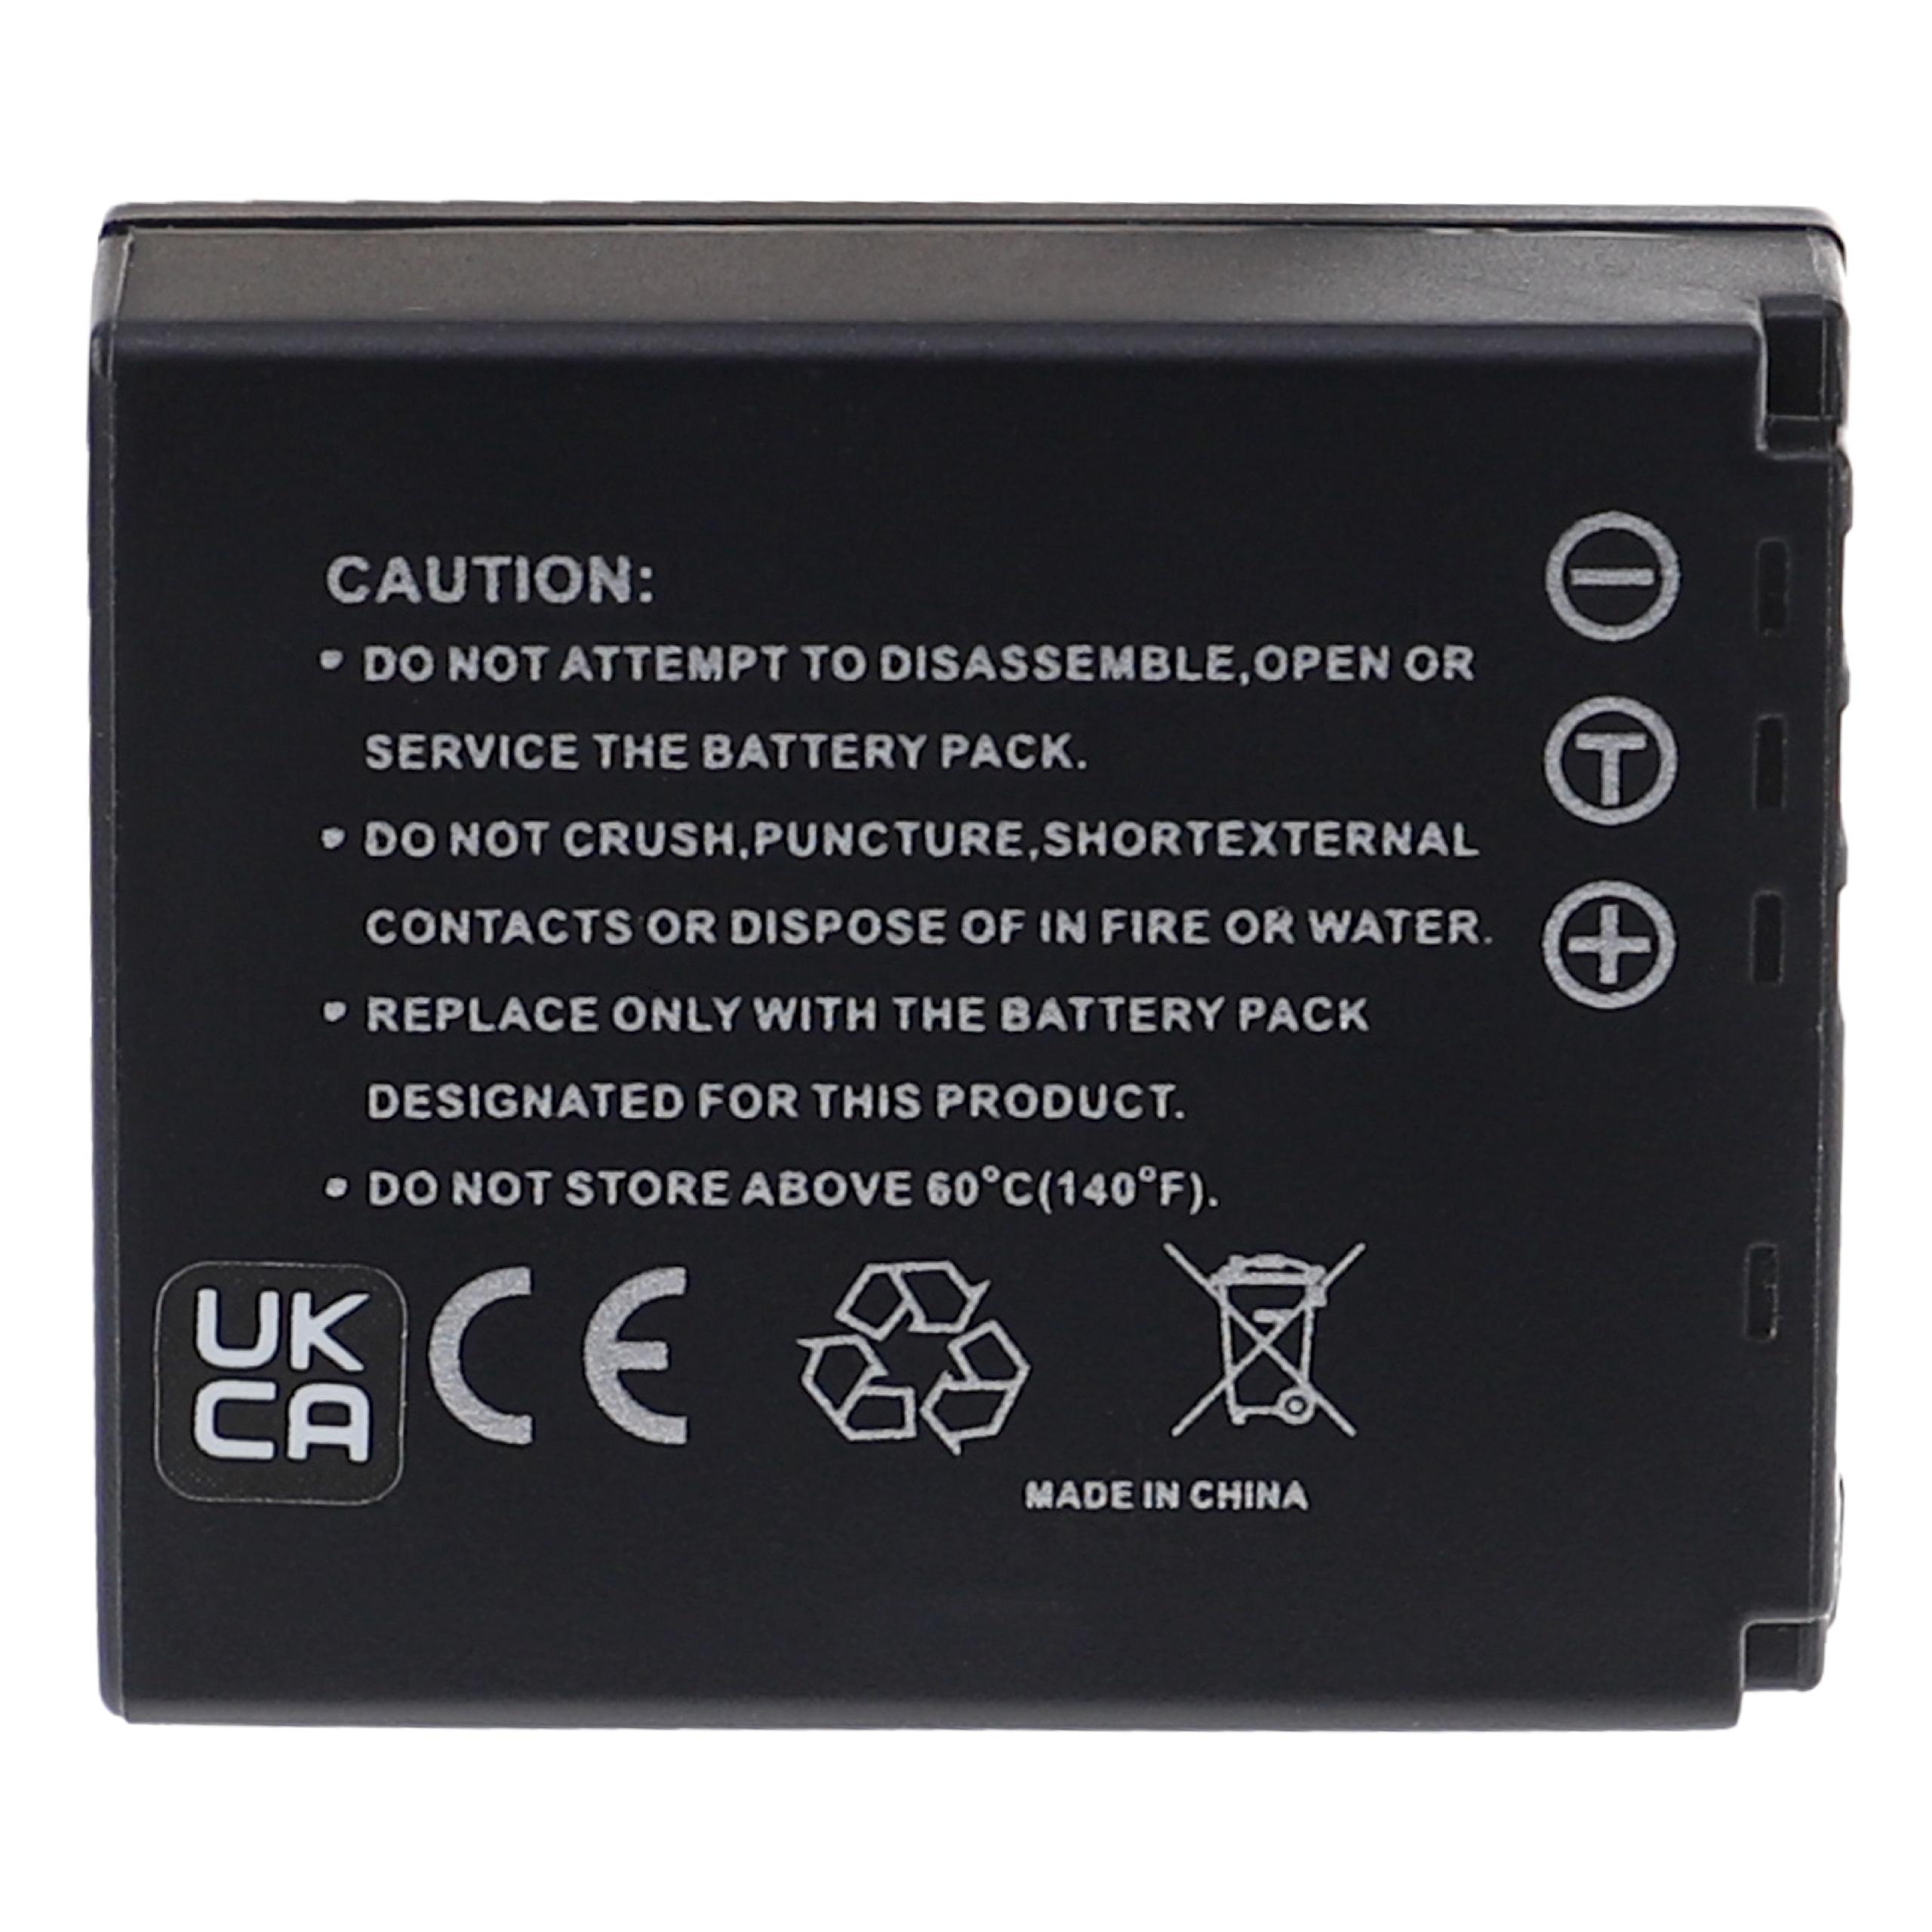 2x Akumulator do aparatu cyfrowego zamiennik Panasonic CGA-S007, CGA-S007A/1B - 1000 mAh 3,7 V Li-Ion